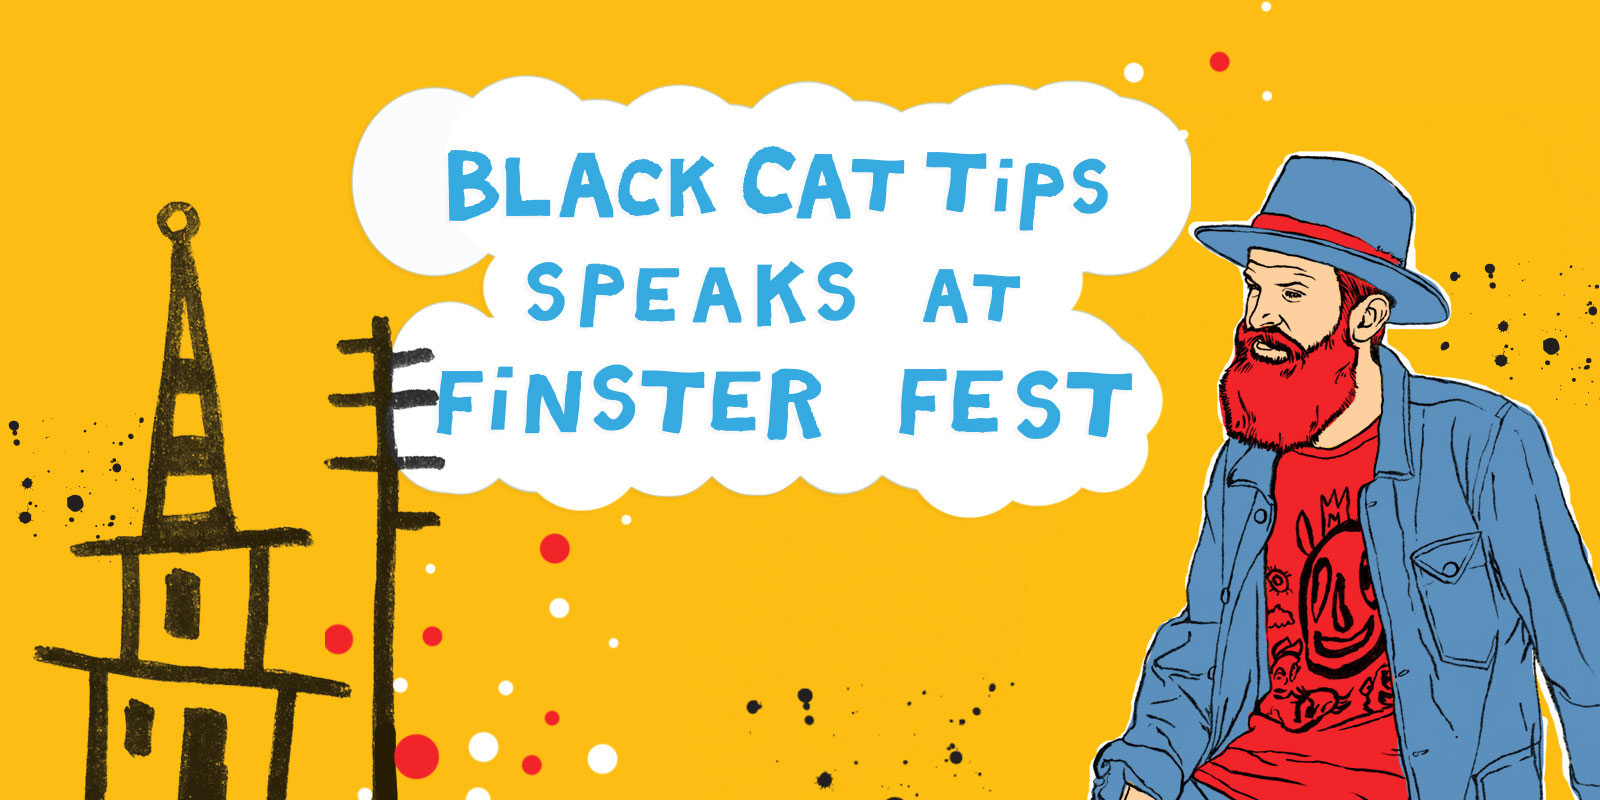 BlackCatTips Speaks at Finsterfest